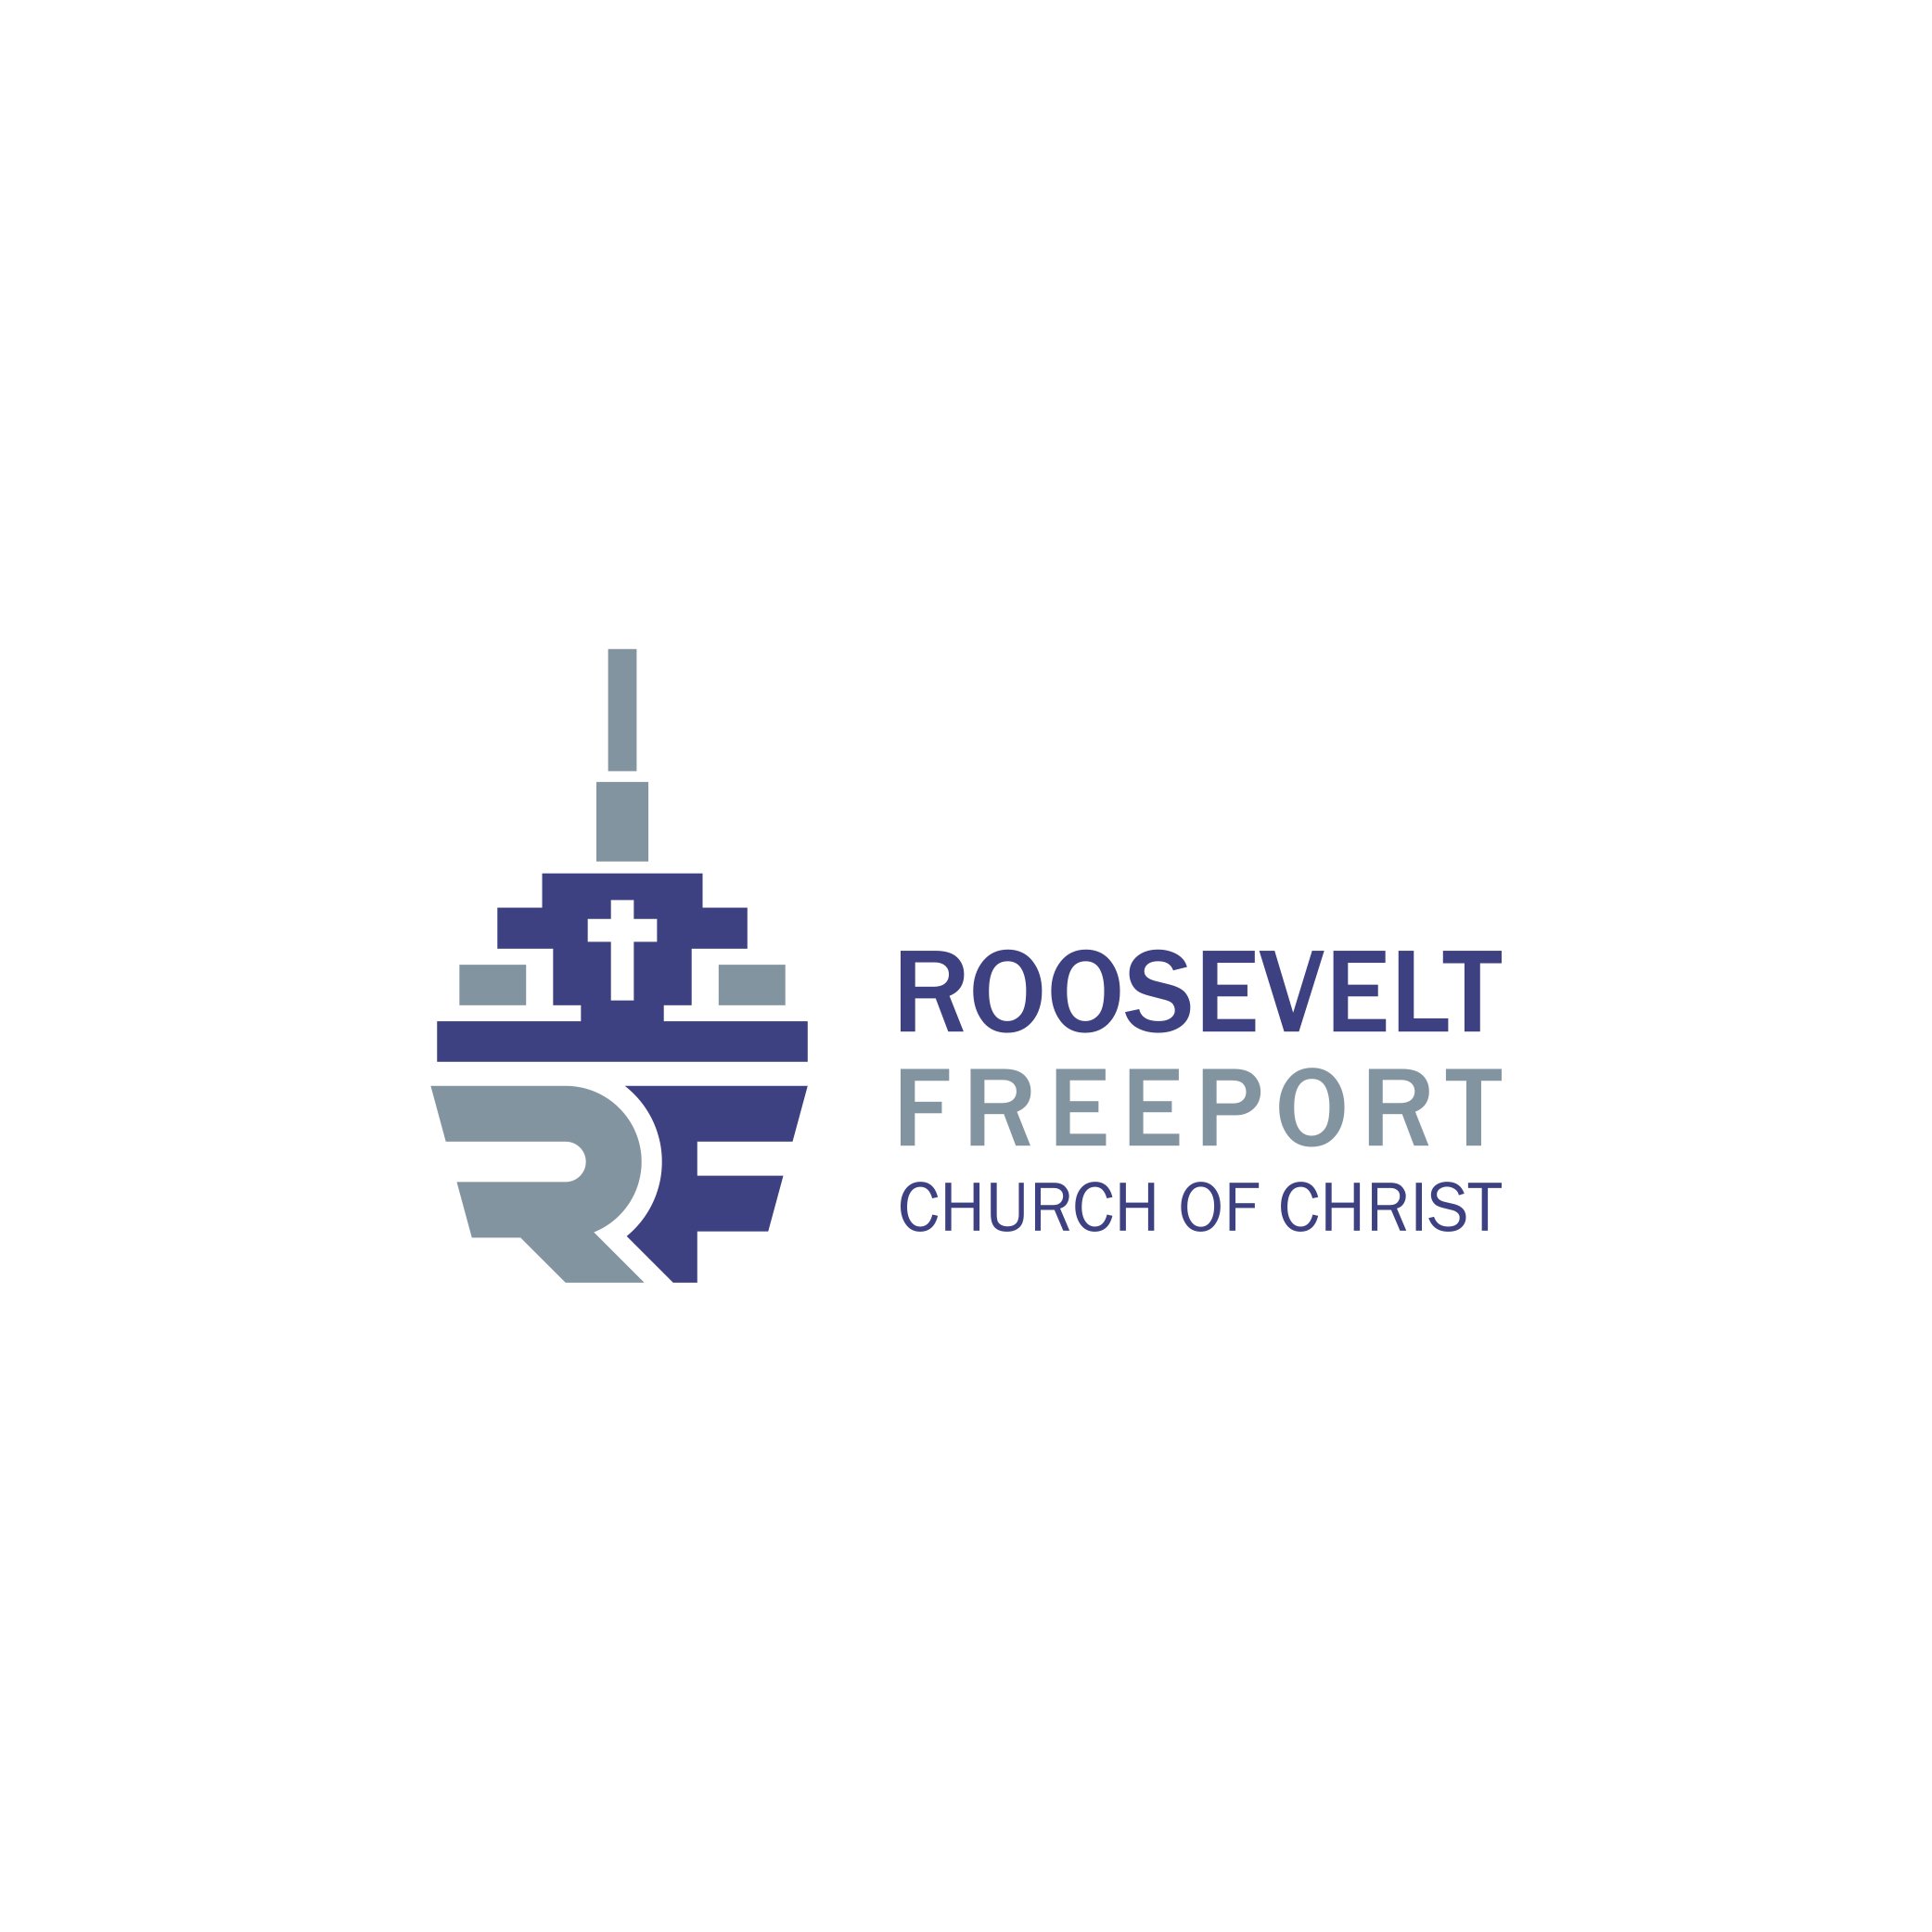 Roosevelt-Freeport Church of Christ